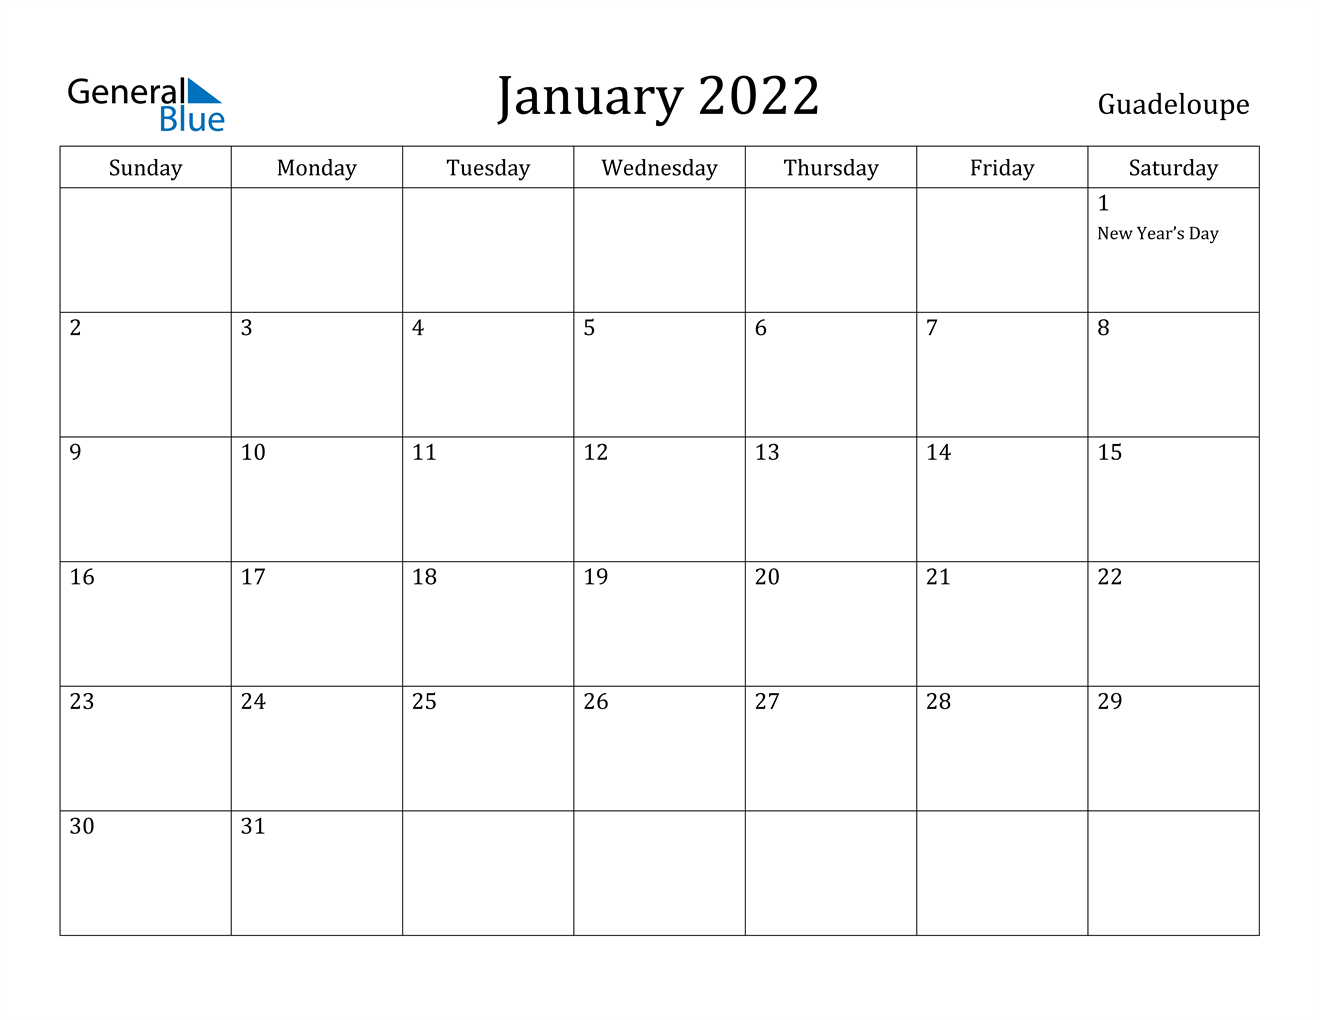 January 2022 Calendar - Guadeloupe